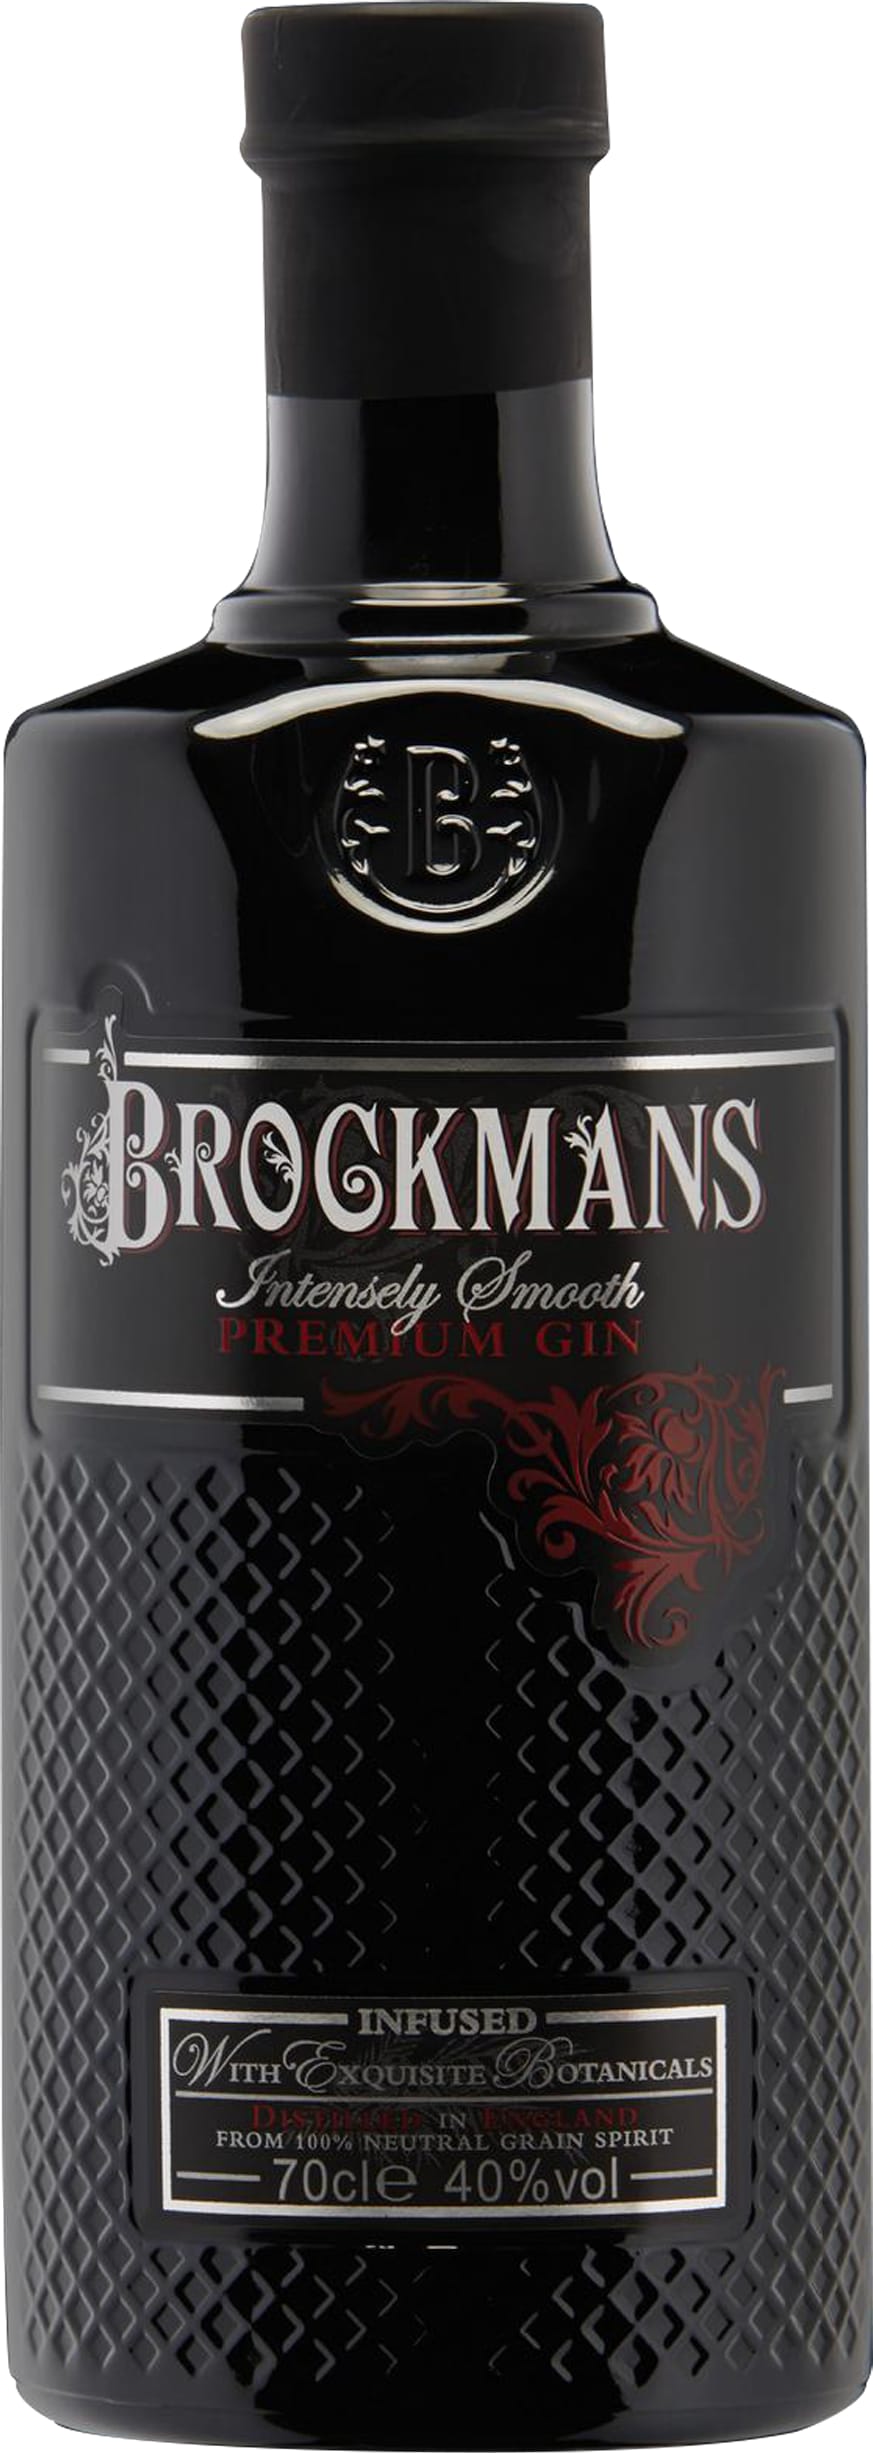 Brockmans Premium Gin 70cl NV - Buy Brockmans Wines from GREAT WINES DIRECT wine shop